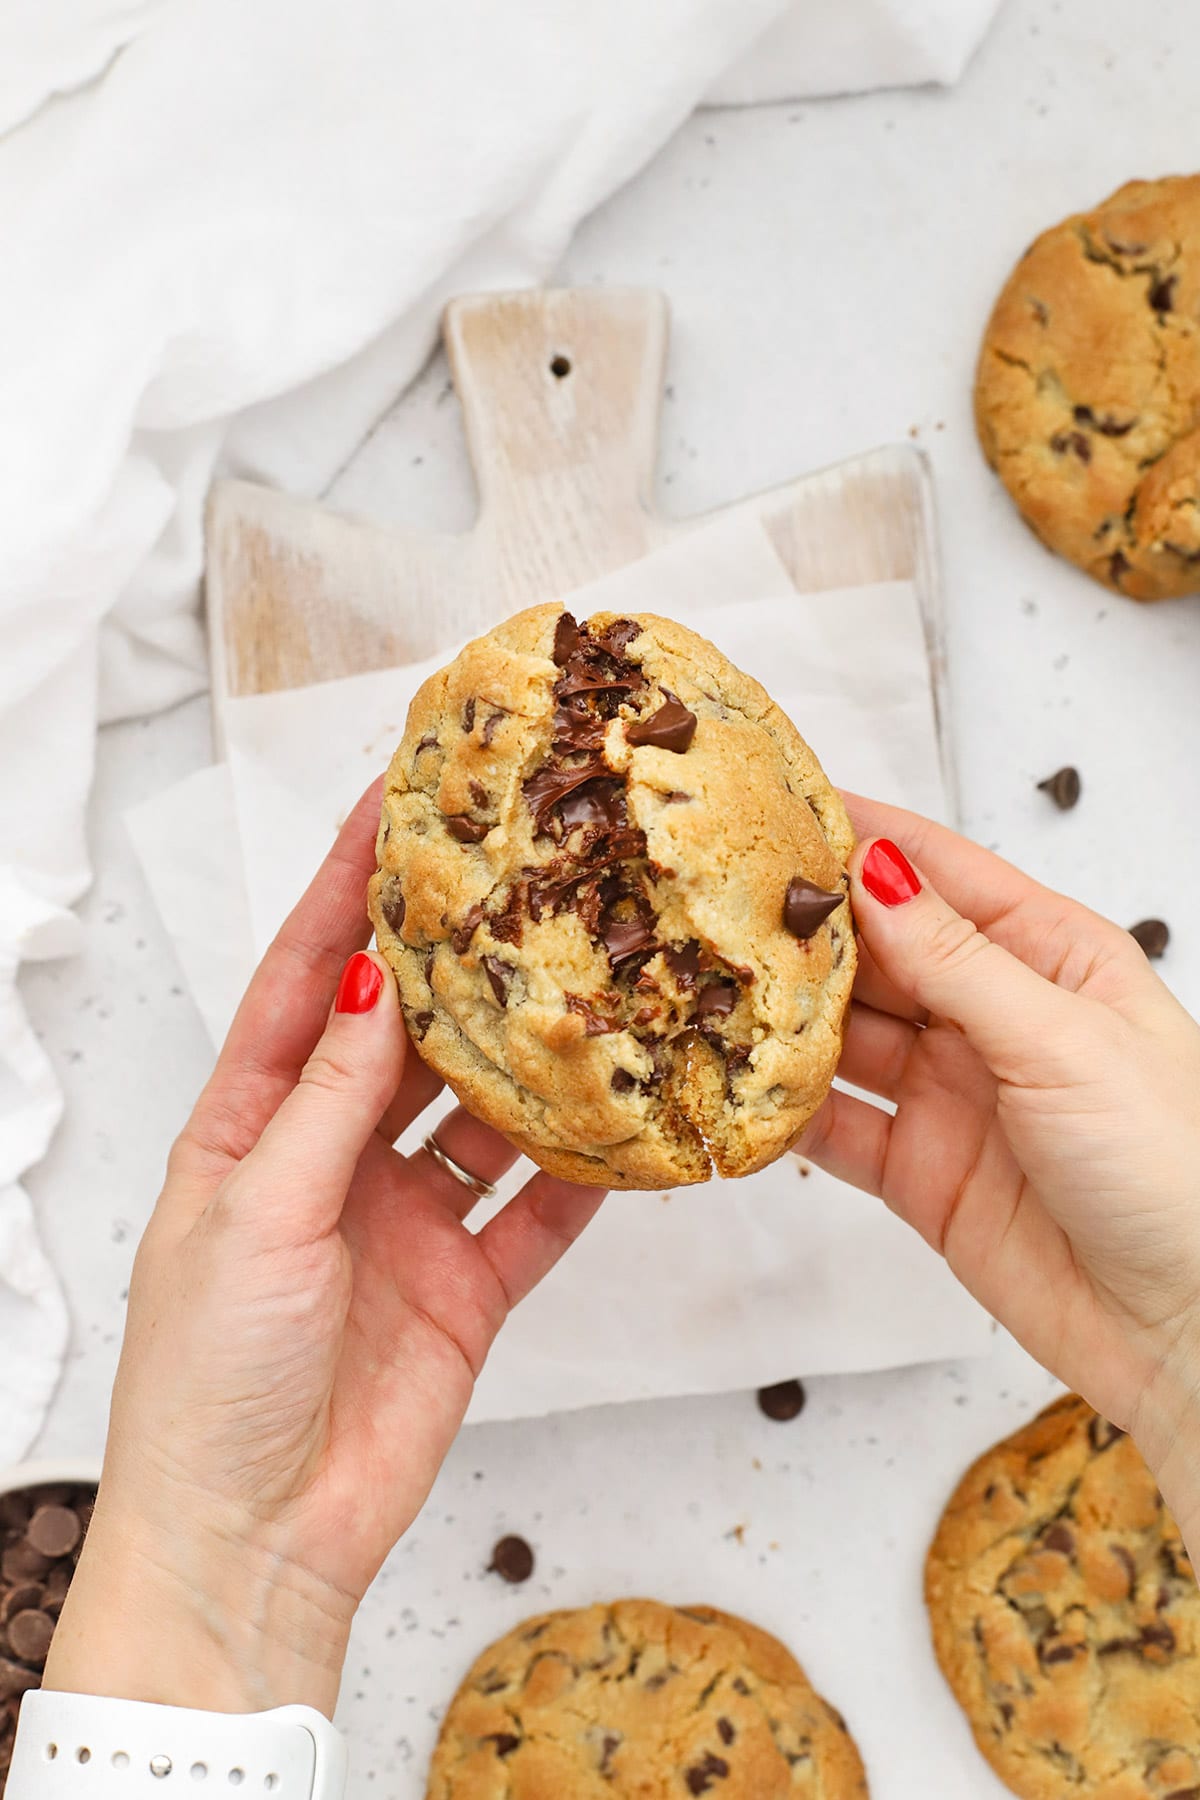 Breaking a gluten-free Levain chocolate chip cookie in half, revealing its gooey center